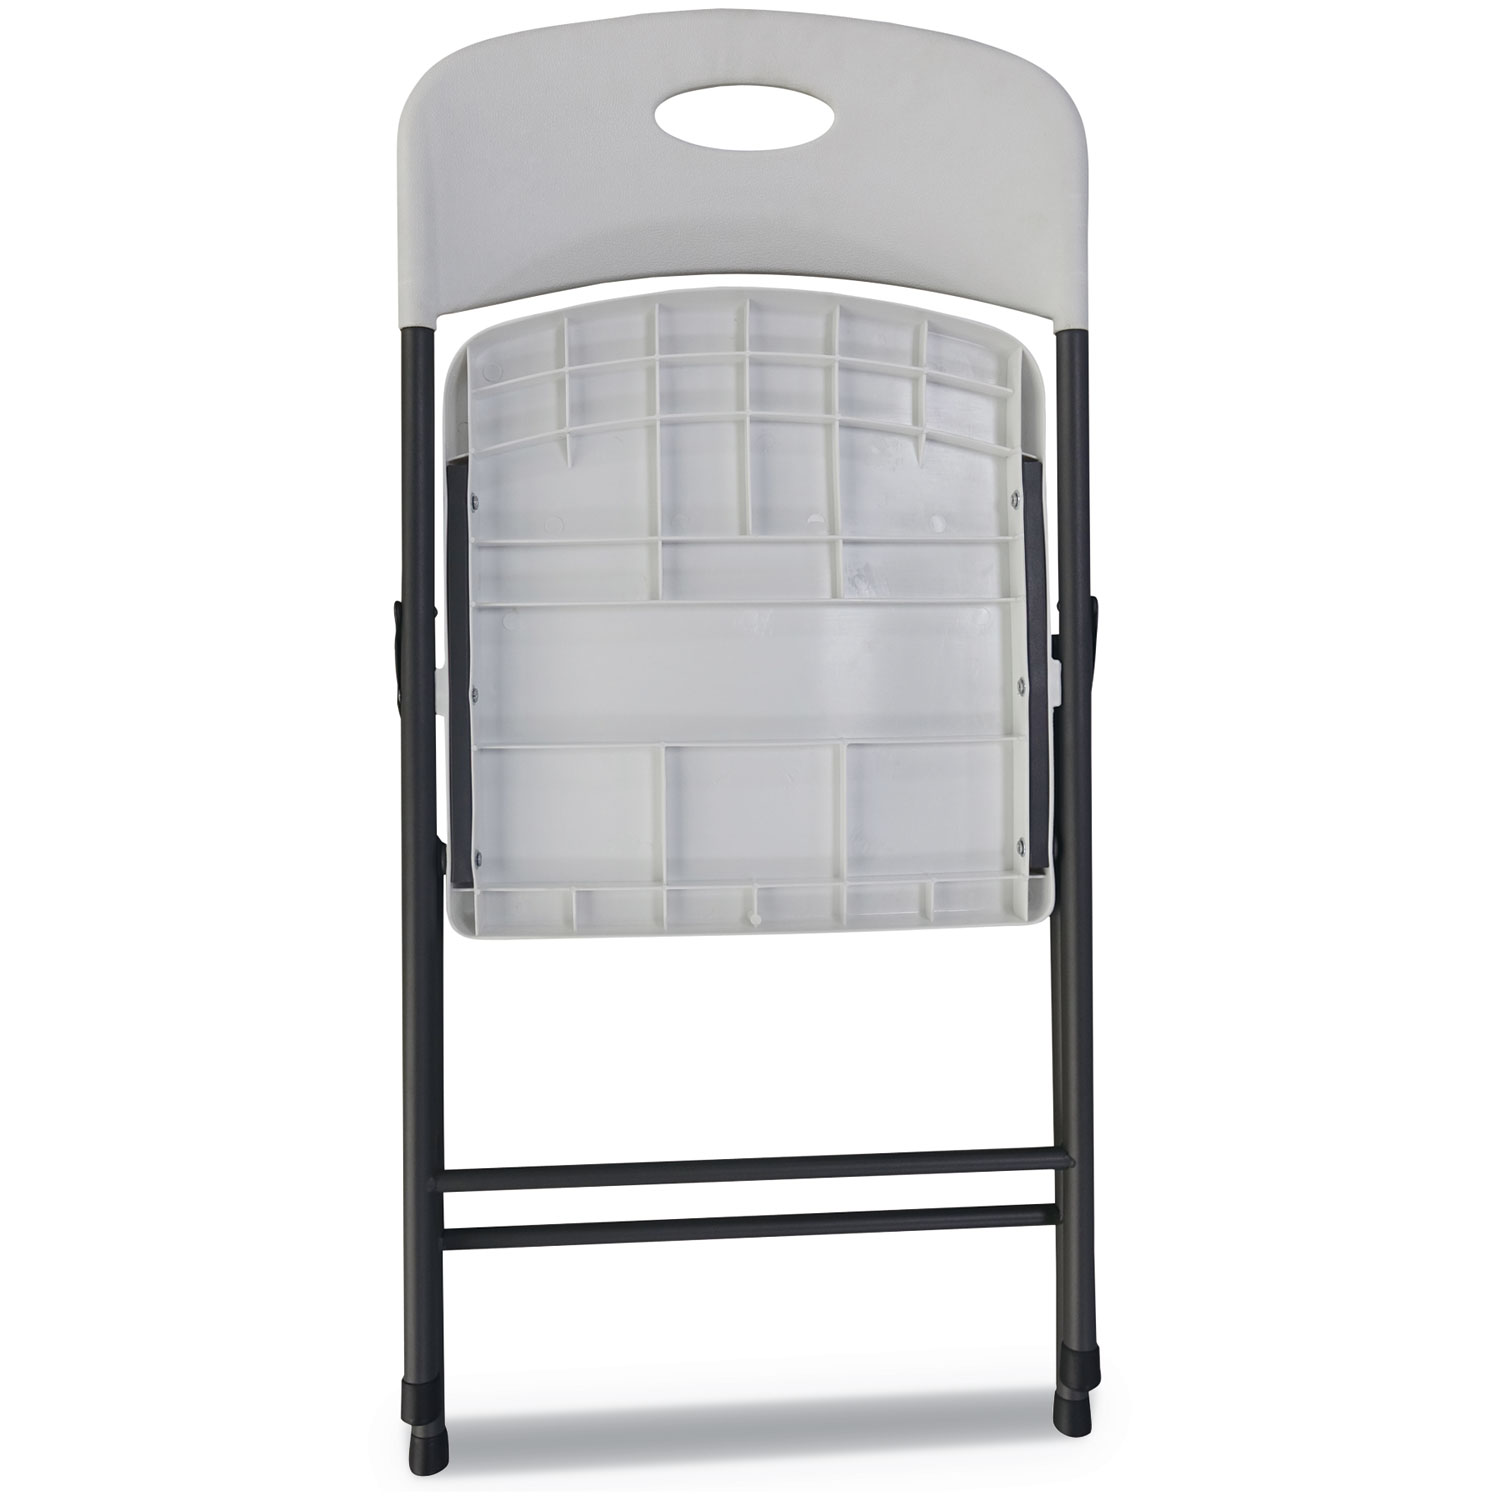  Alera ALEFR9402 Molded Resin Folding Chair, White Seat/White Back, Dark Gray Base, 4/Carton (ALEFR9402) 